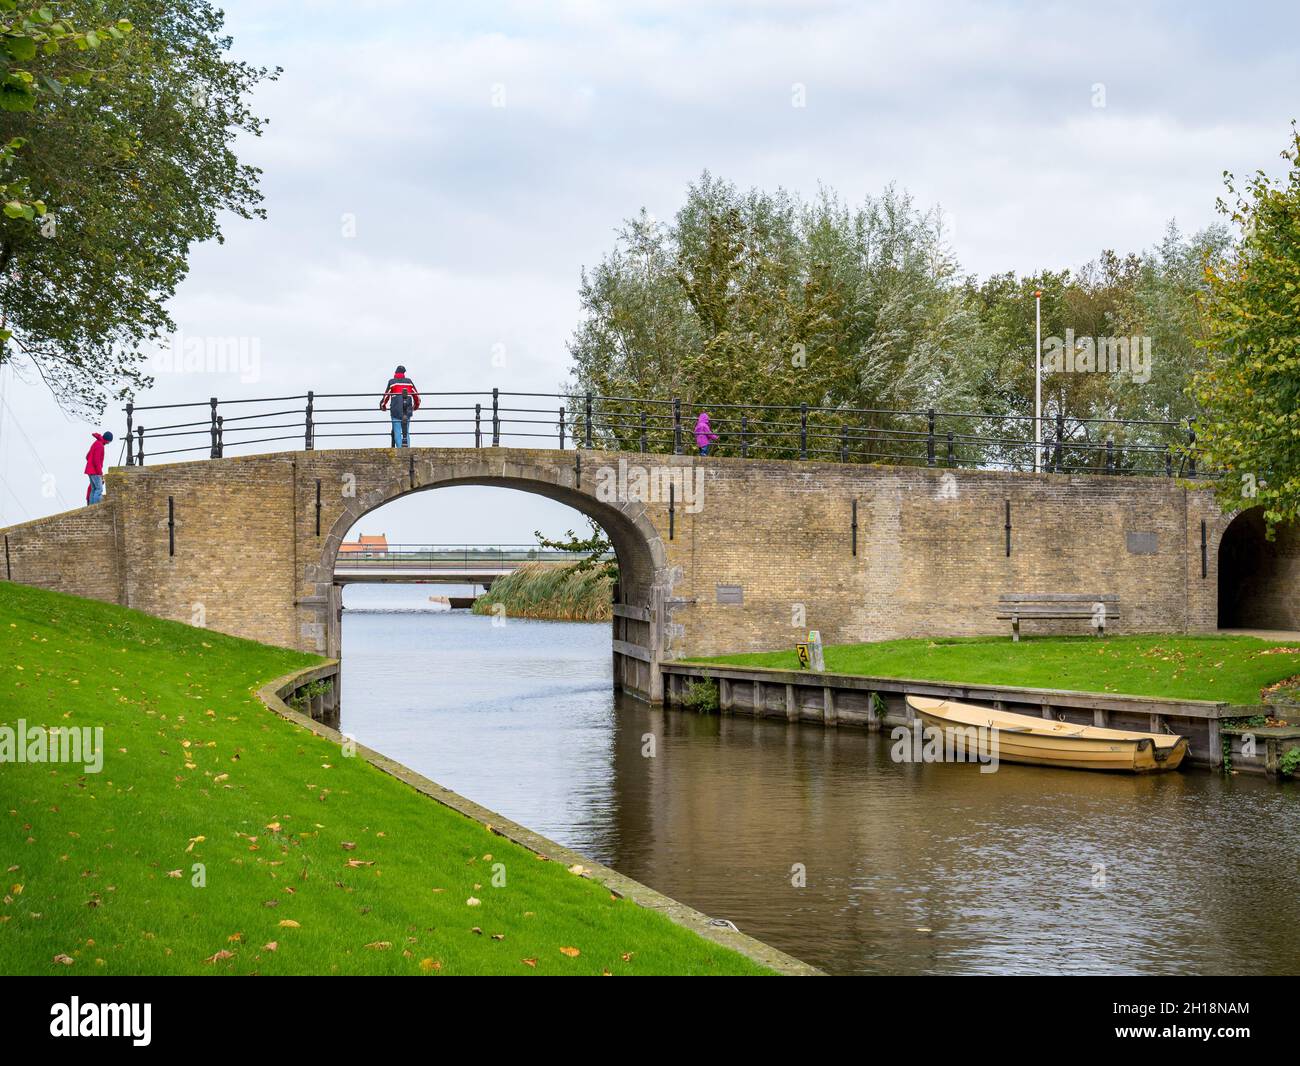 Persone che camminano sul ponte di Woudsender Water gate nella città di Sloten, Sleat, Friesland, Paesi Bassi Foto Stock